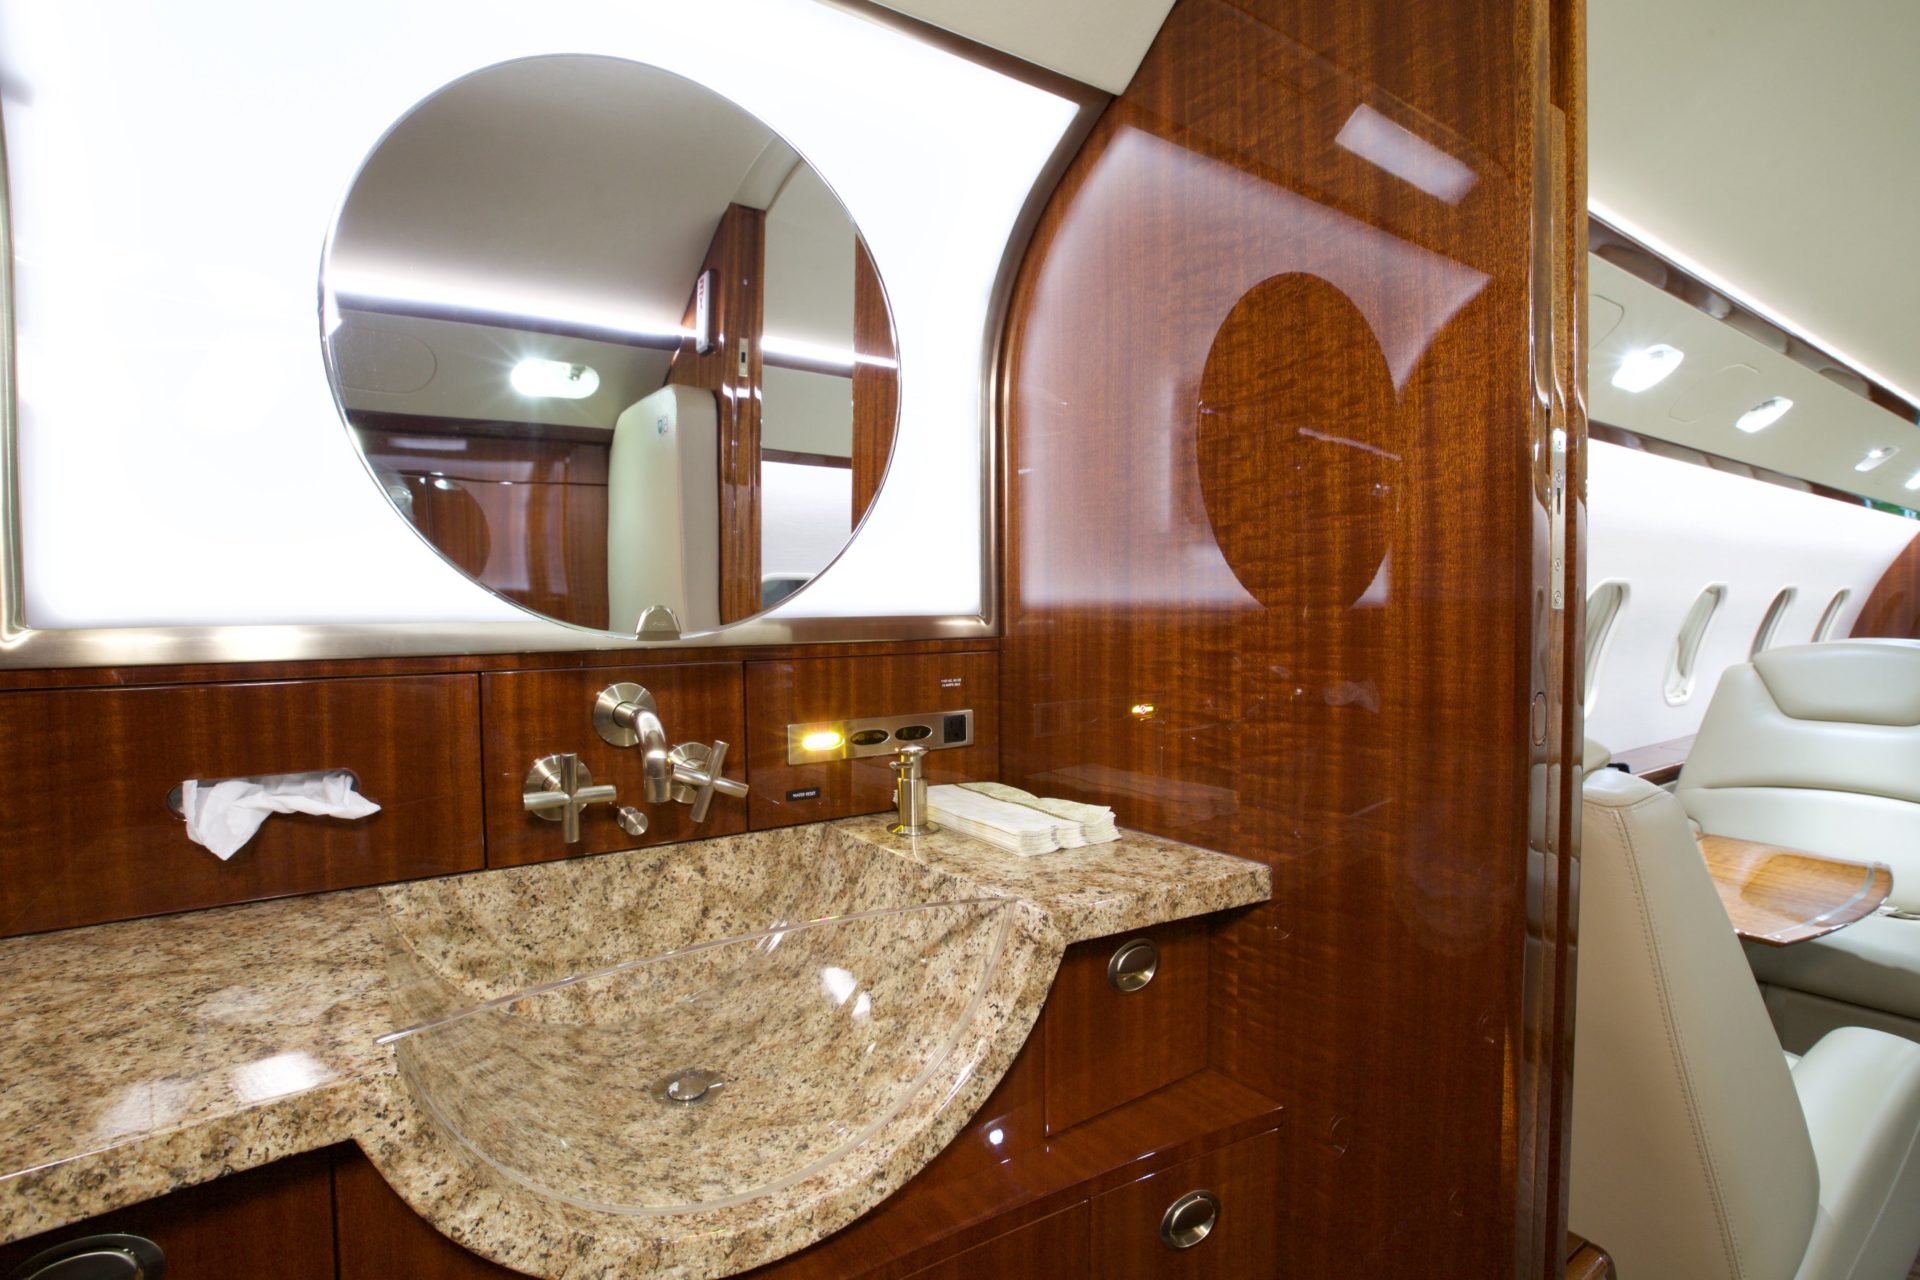 Marble bathroom sink and backlit round mirror